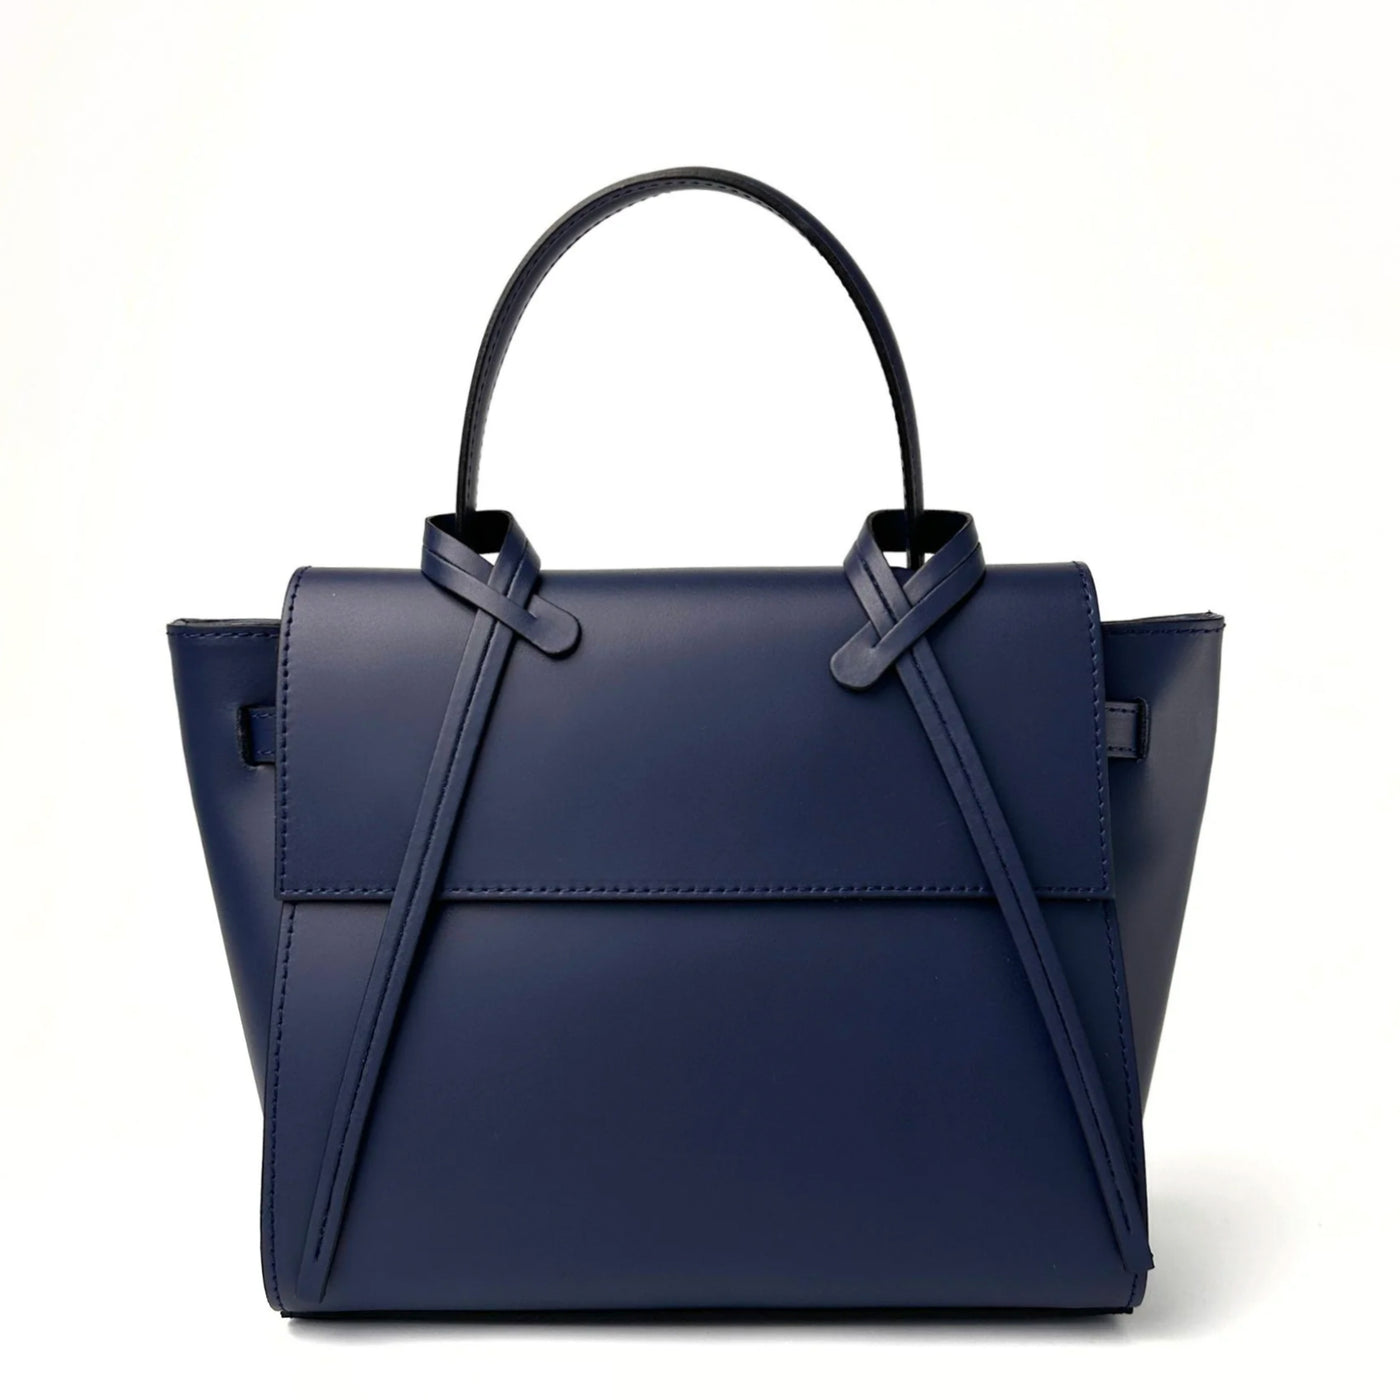 Leather bag "Arezzo", Dark blue